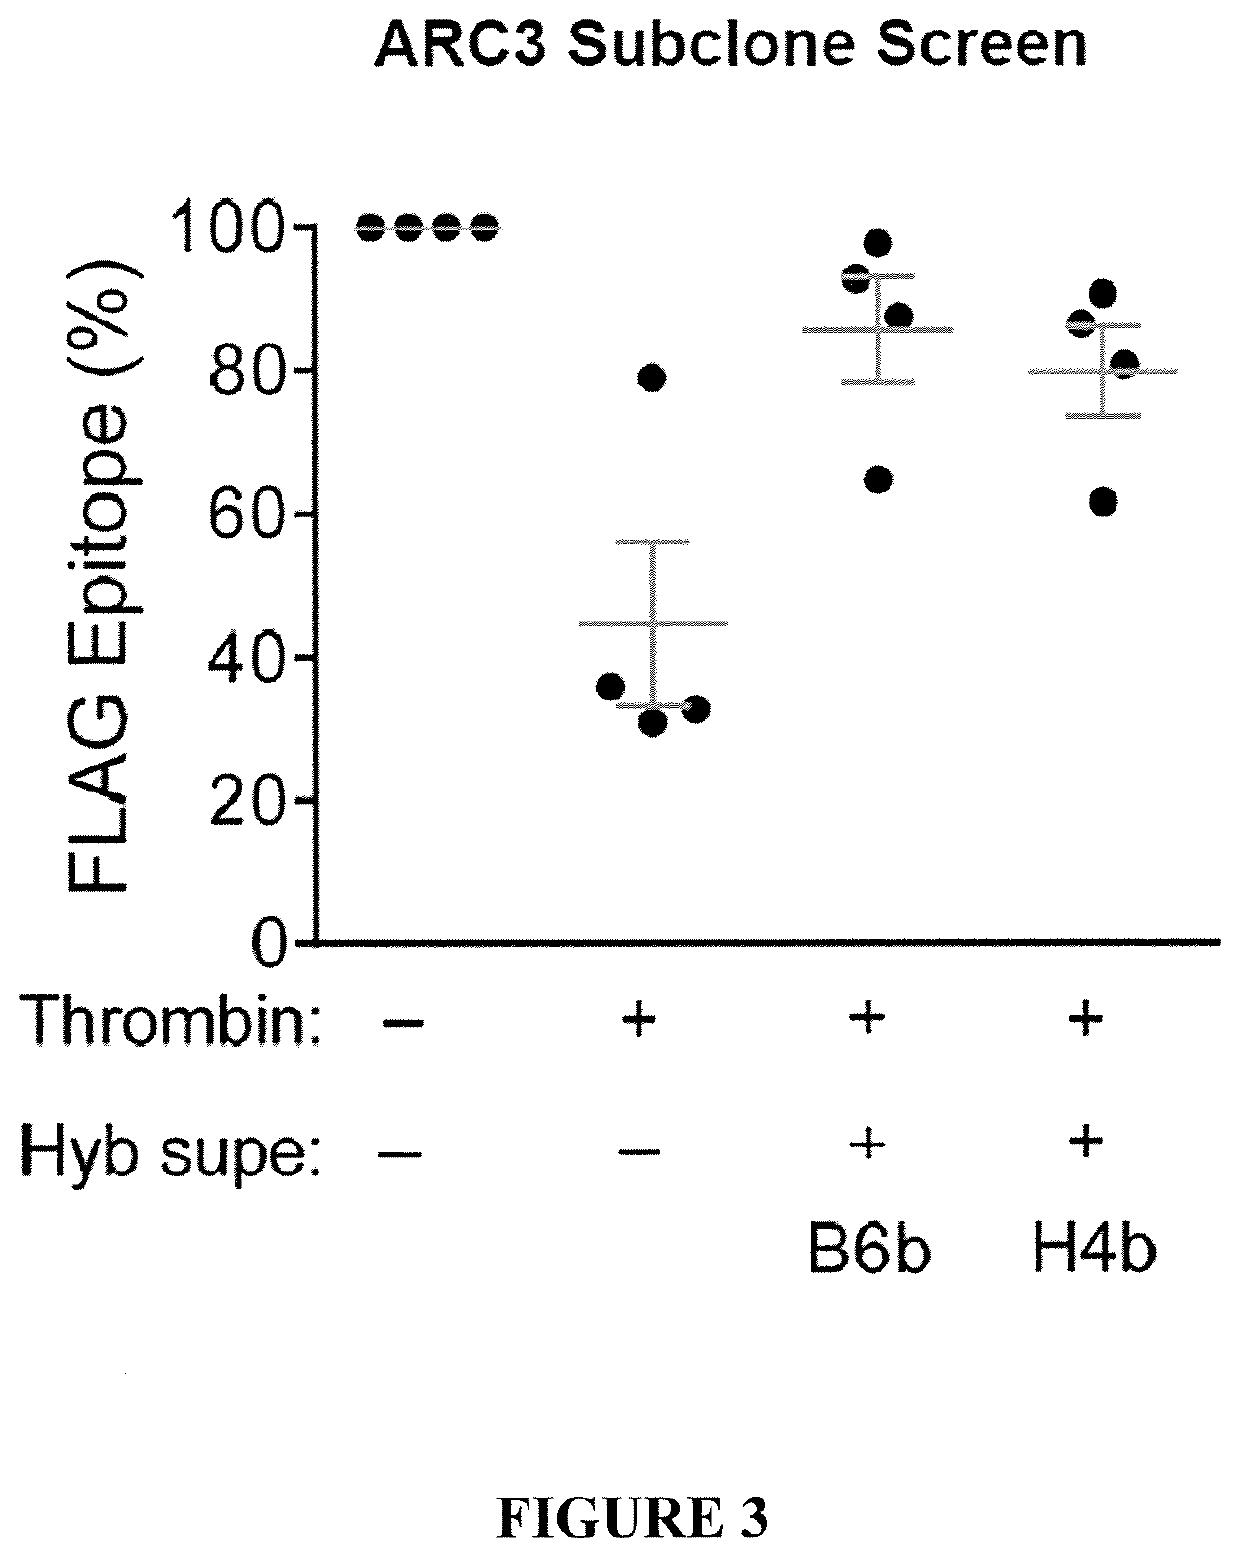 Binding proteins to the human thrombin receptor, par4